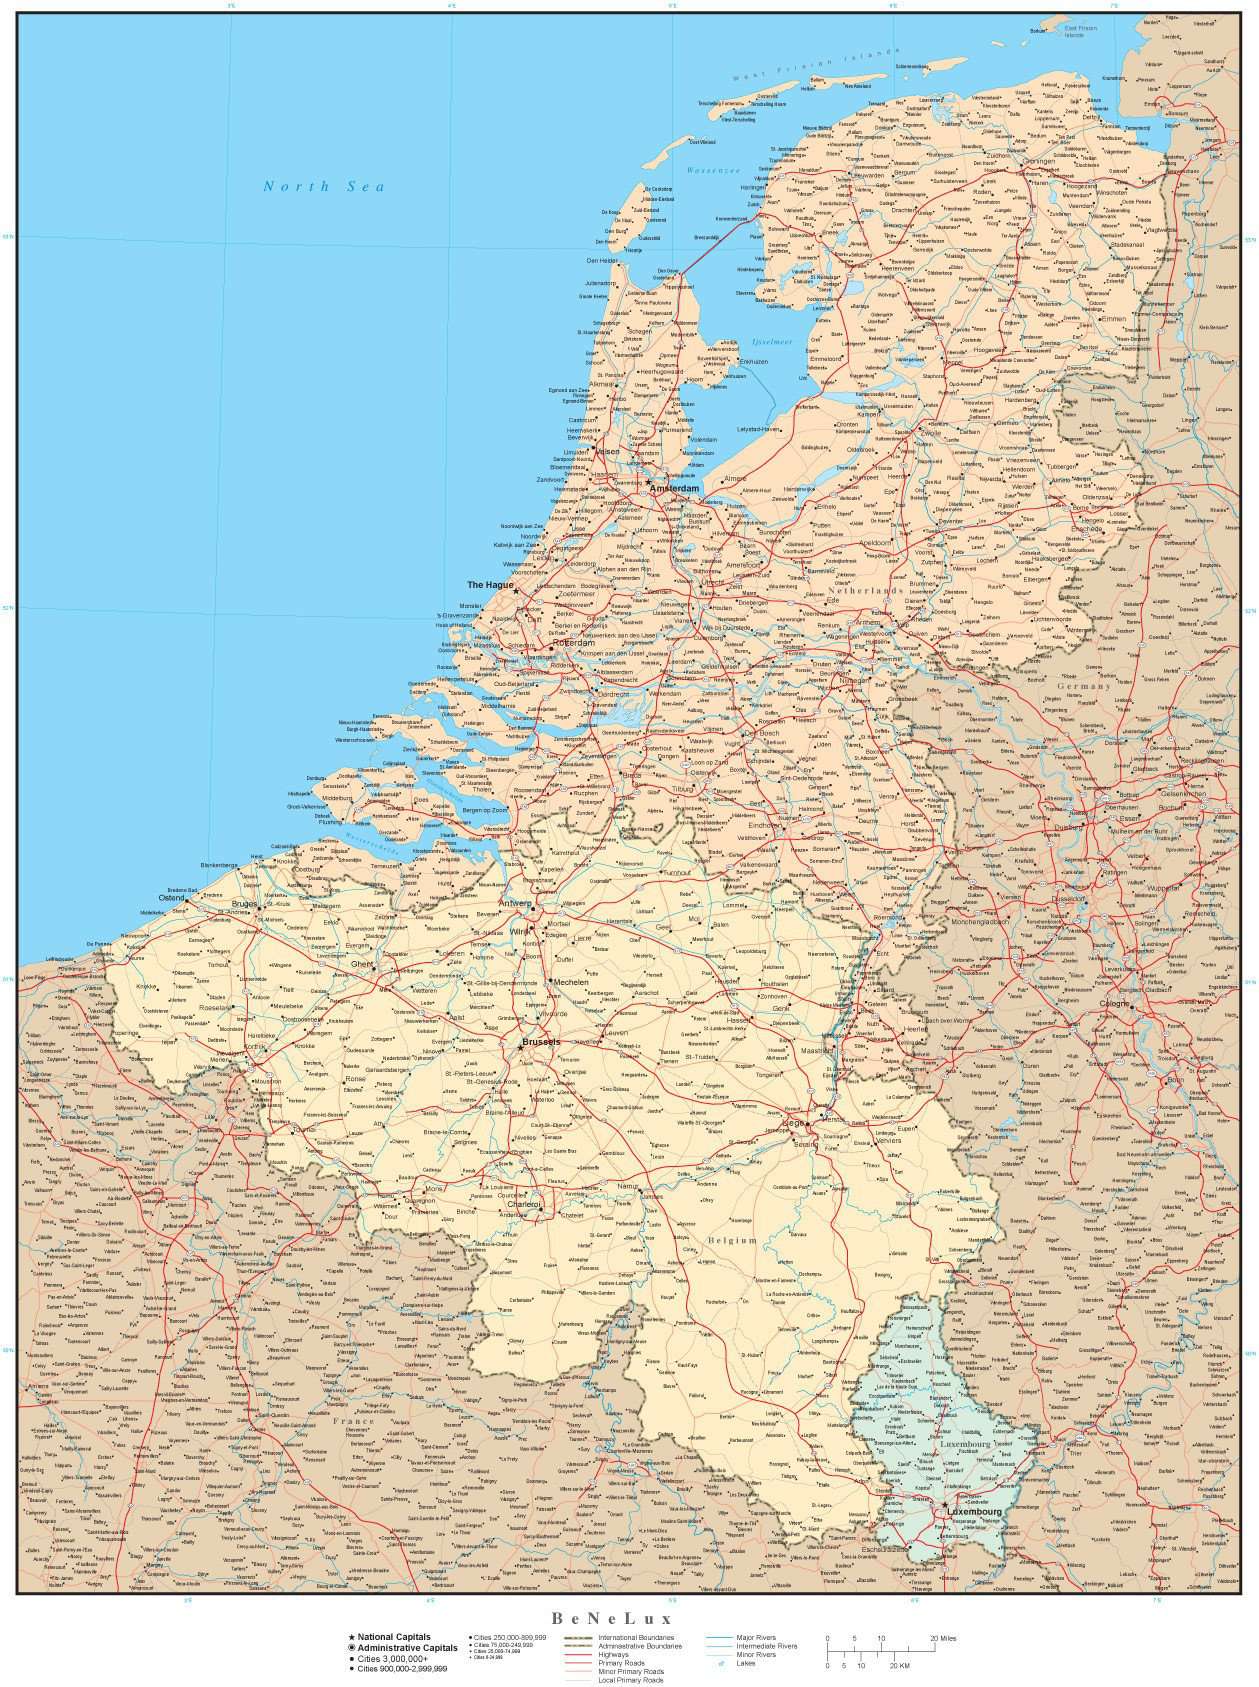 Belgium Netherlands Luxembourg map in Adobe Illustrator vector format